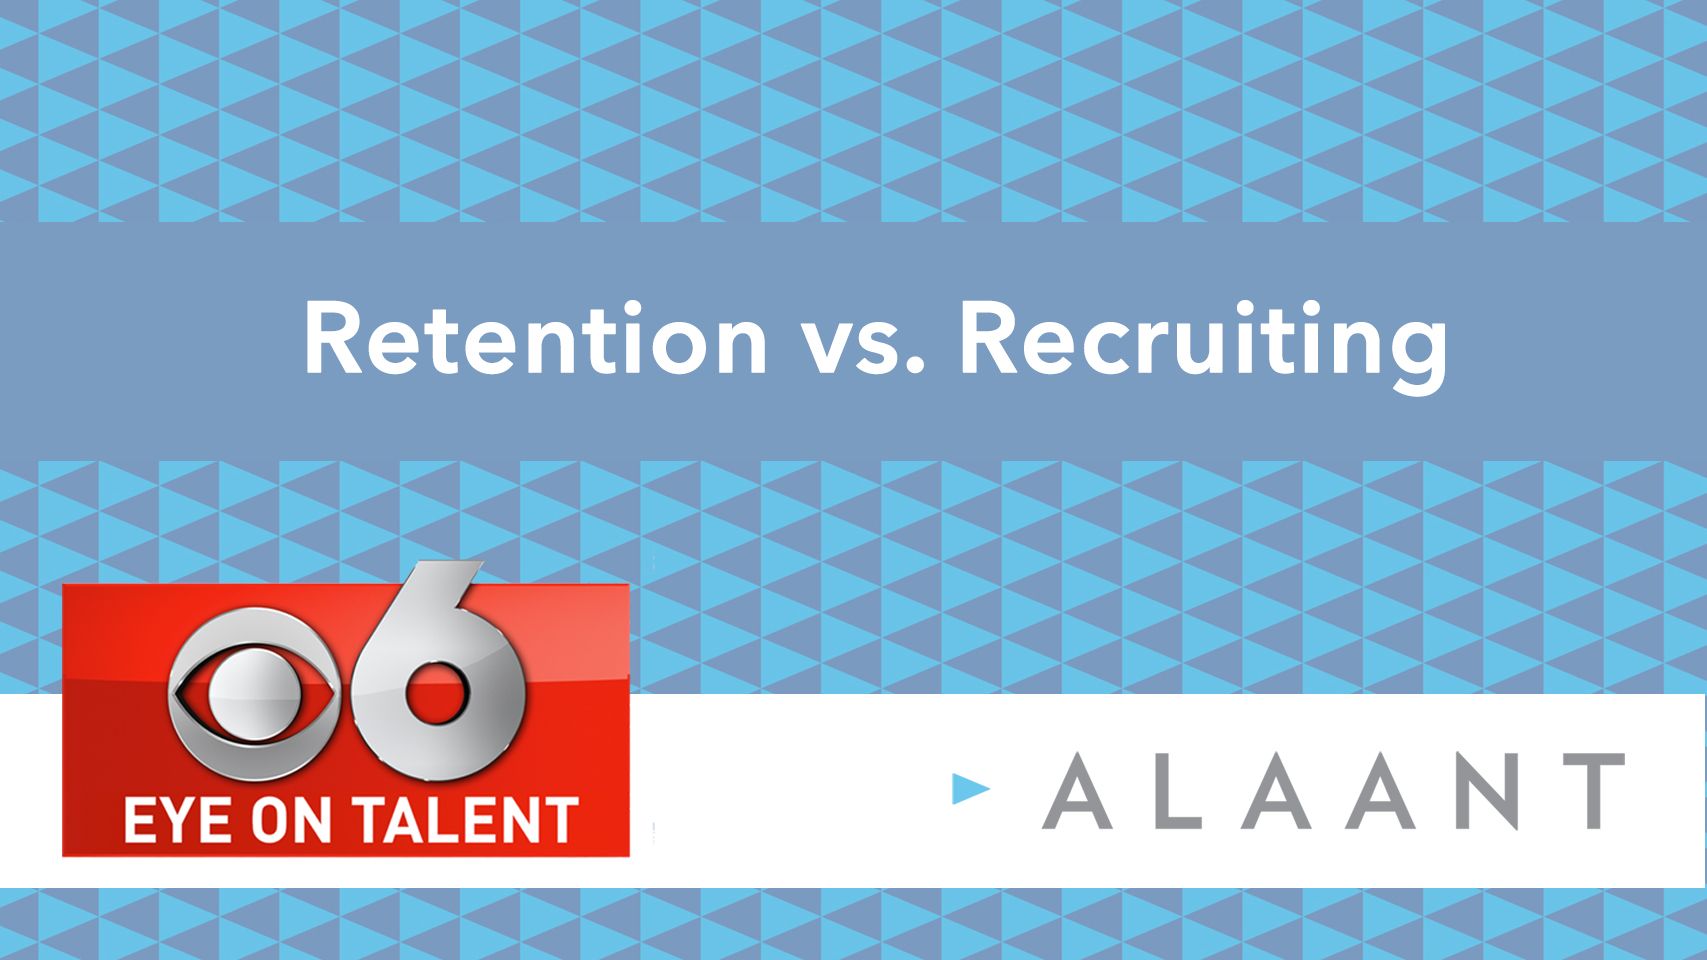 Alaant Eye on Talent: Retention vs. Recruiting